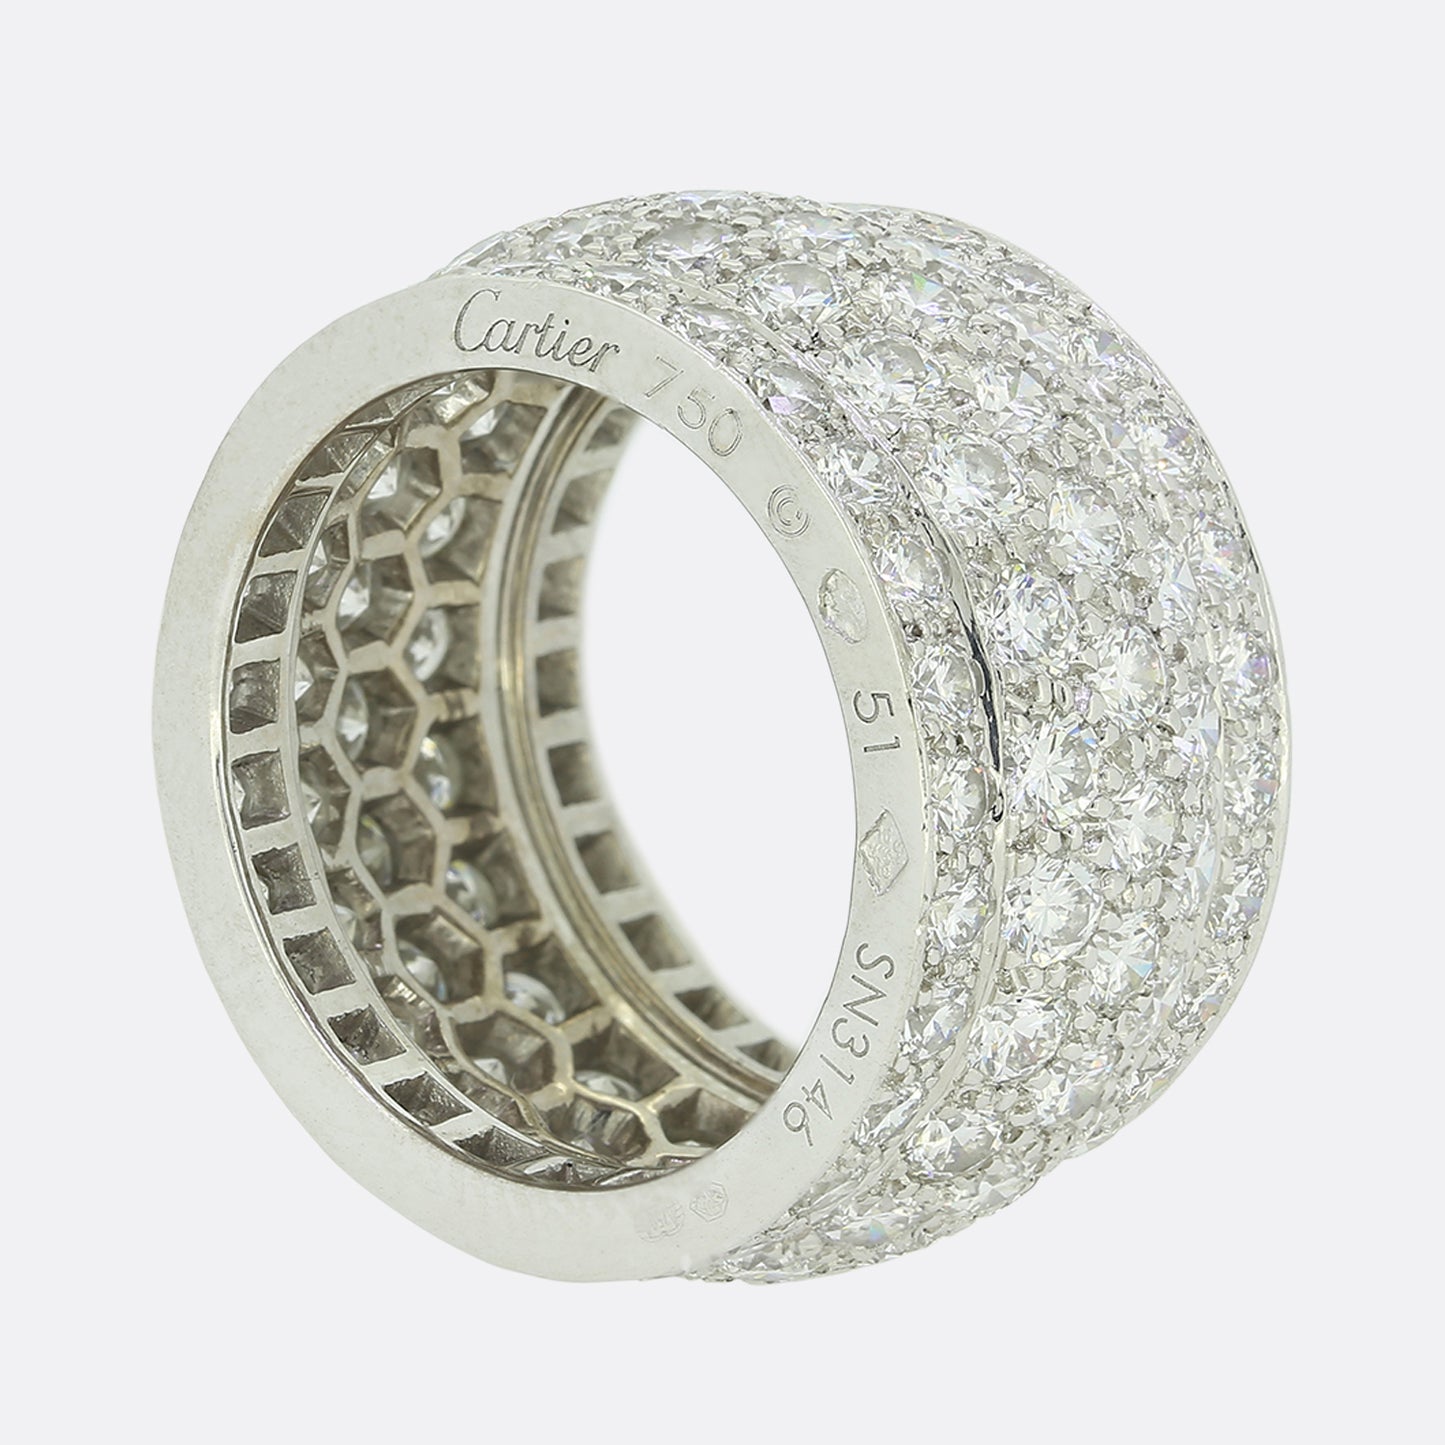 Cartier 5.50 Carat Diamond Nigeria Ring Size L (51)